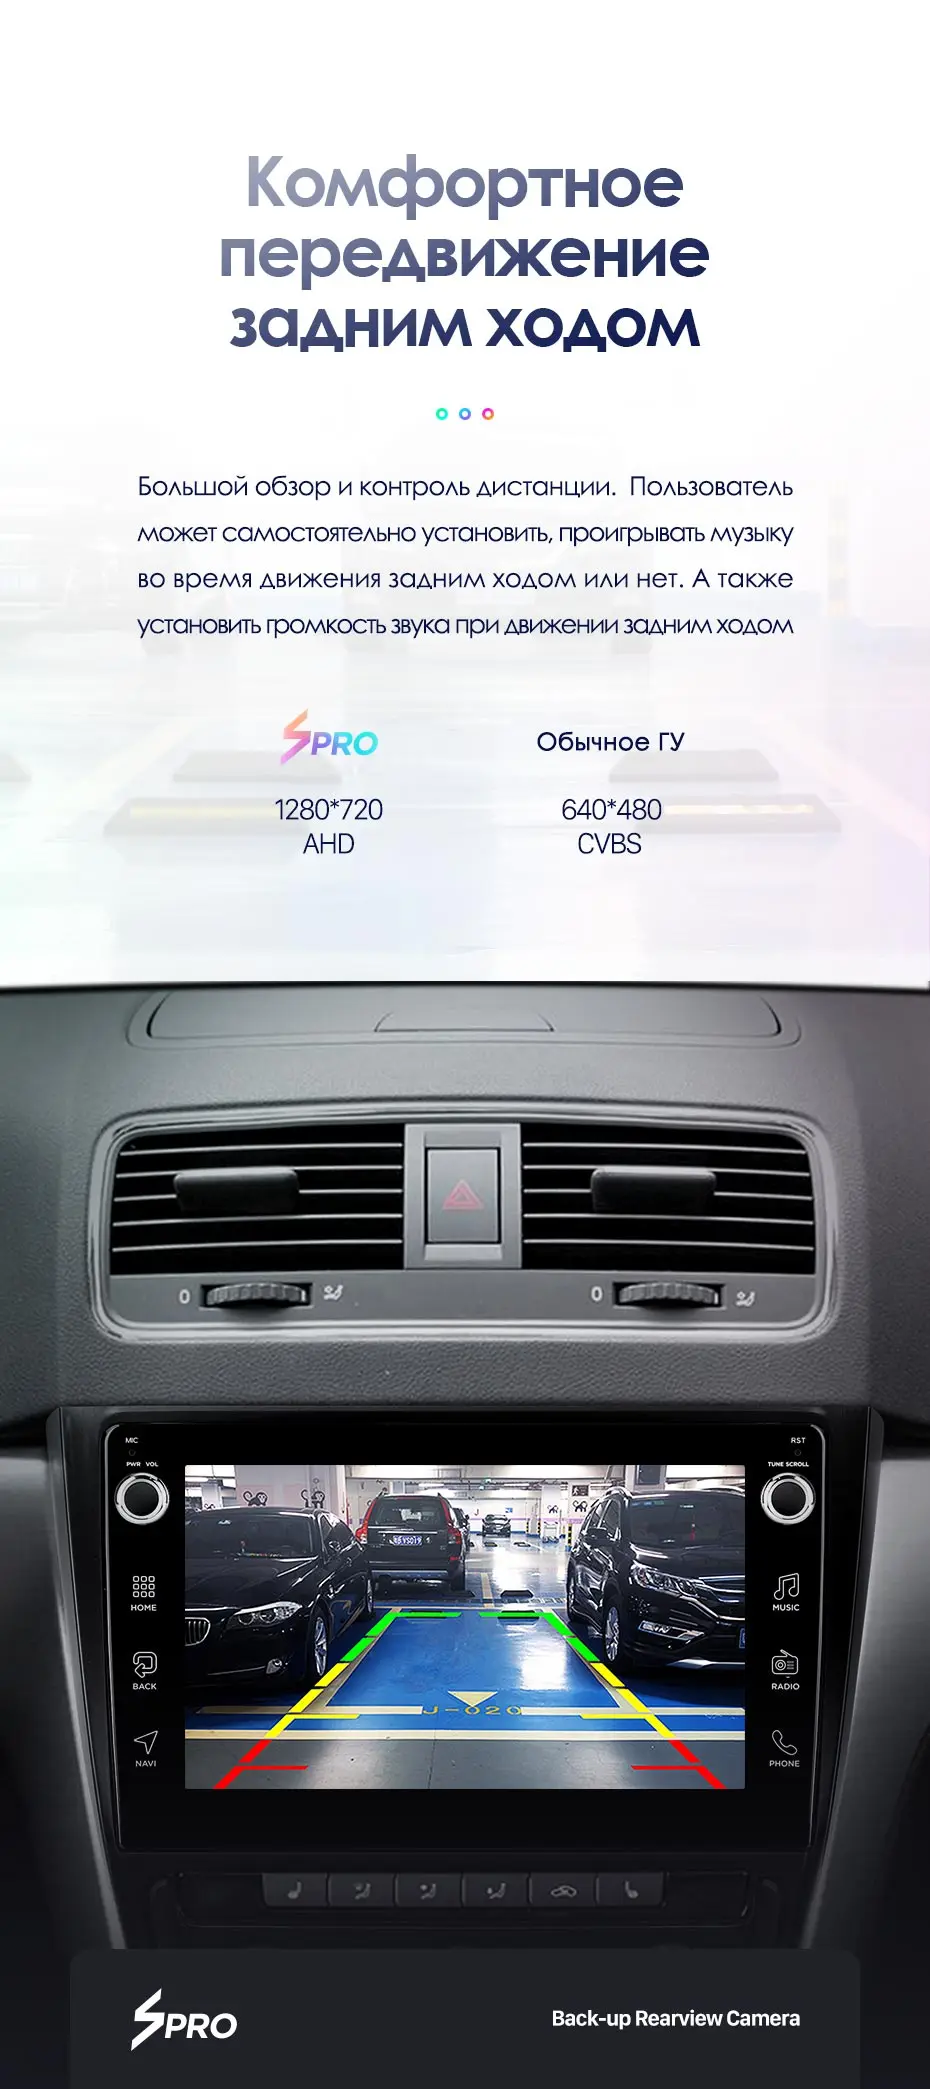 TEYES SPRO Штатная магнитола для Шкода Йети Skoda Yeti 5L 2009 2011 2012 2013 Android 8.1, до 8-ЯДЕР, до 4+ 64ГБ 32EQ+ DSP 2DIN автомагнитола 2 DIN DVD GPS мультимедиа автомобиля головное устройство